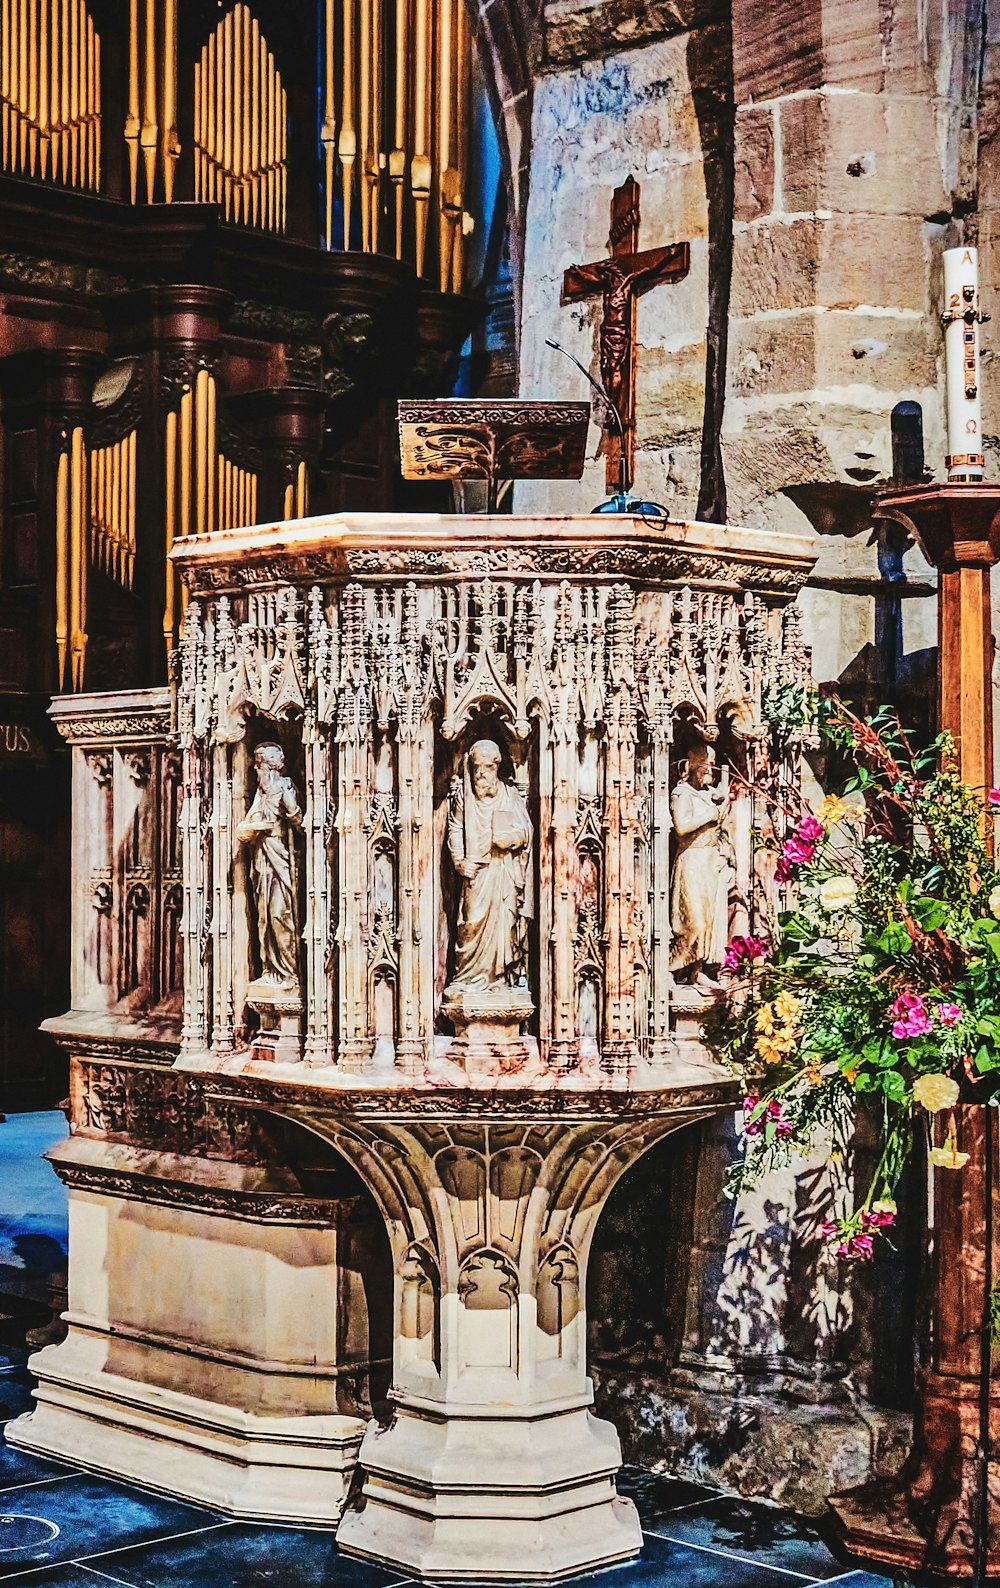 a statue of jesus on a pedestal in a church